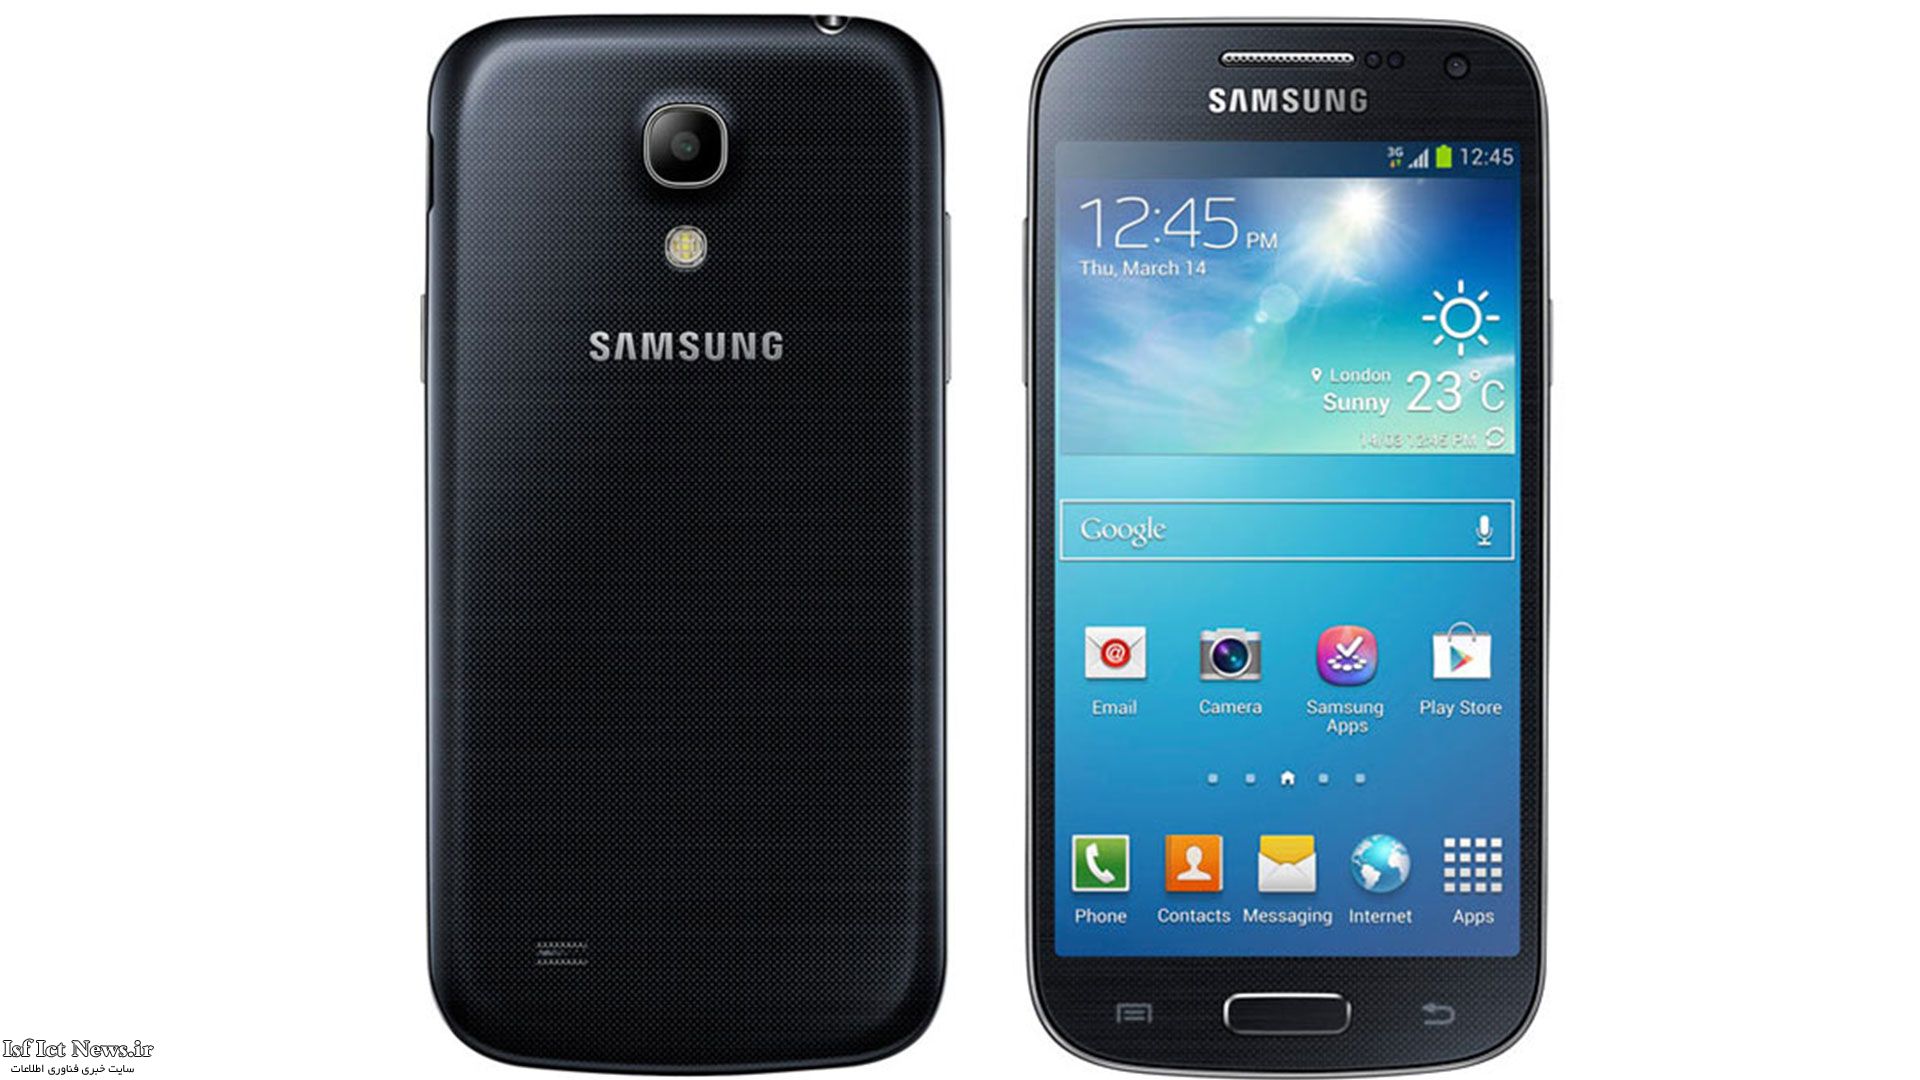 Samsung s 14. Samsung s4 Mini. Samsung Galaxy s4. Самсун гелекси с 4 мини. Samsung Galaxy s4 Mini gt-i9190.